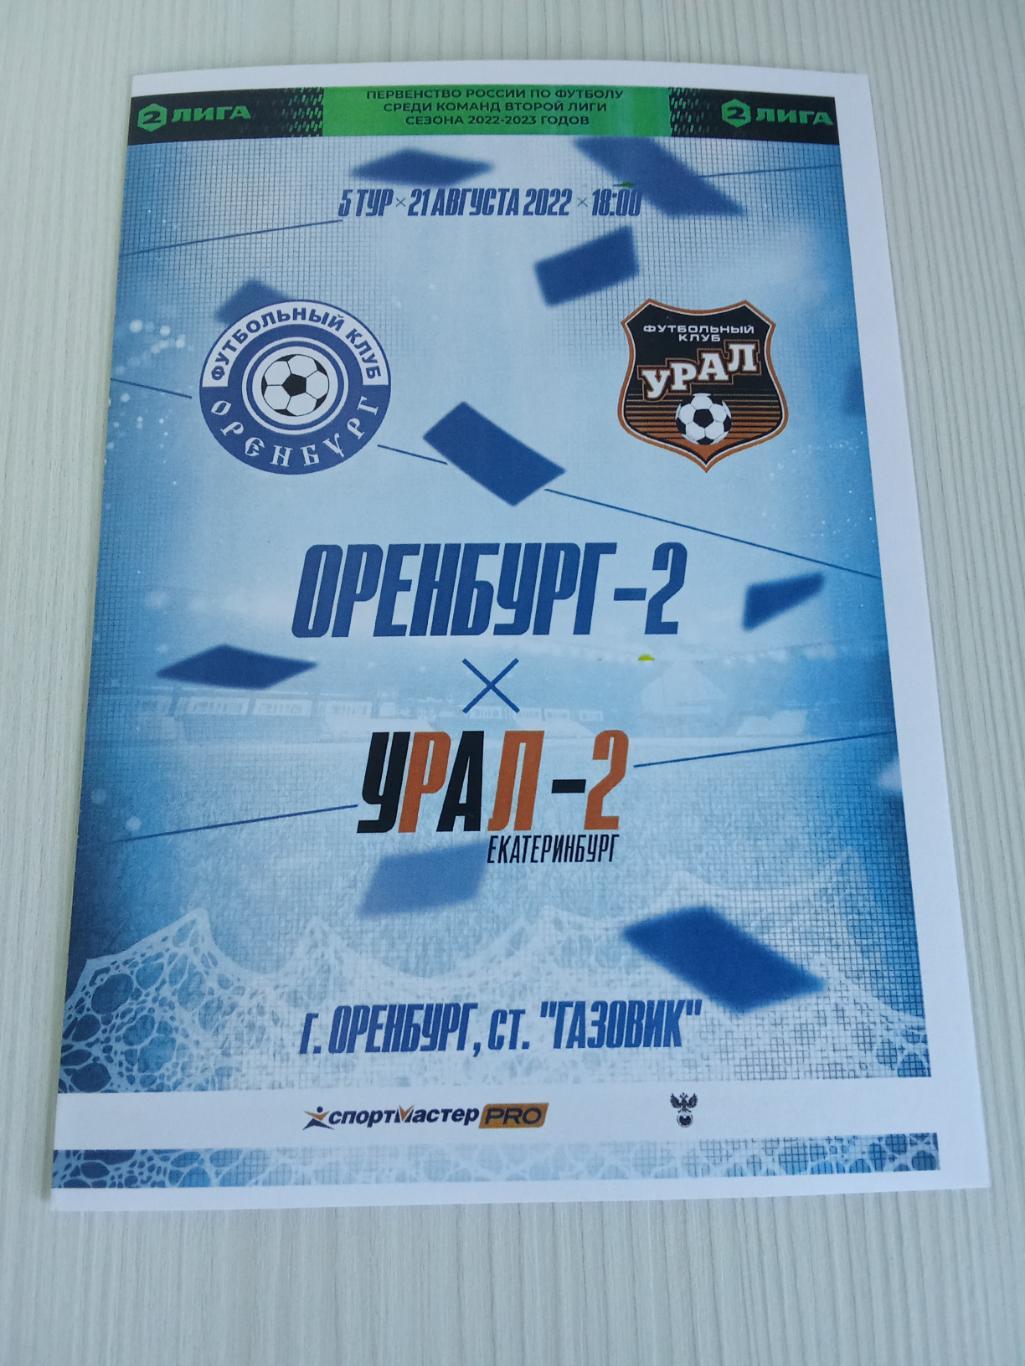 2 Лига 2022-2023 Оренбург -2 -Урал -2.